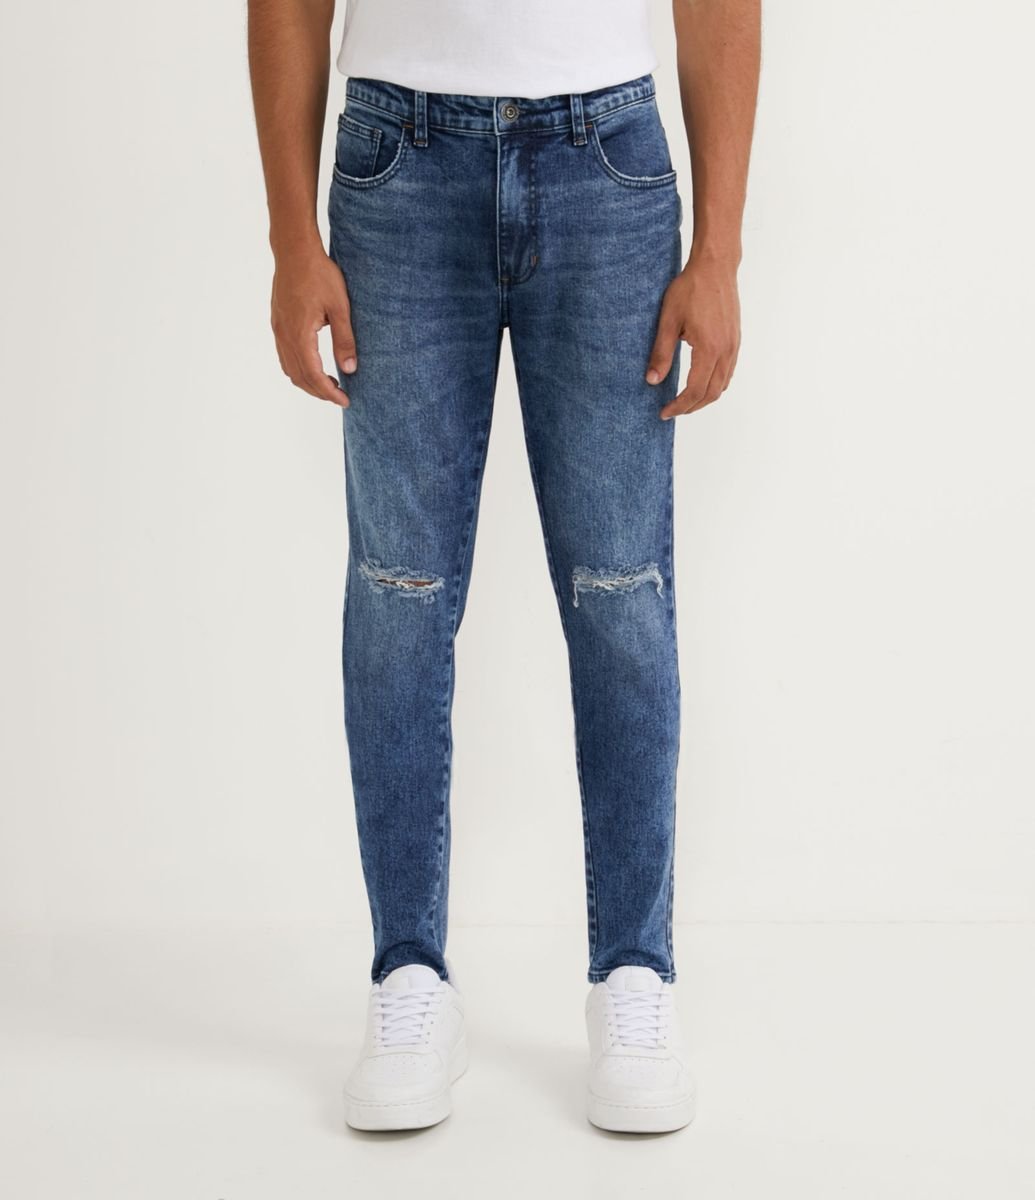 Calça jeans Masculina Skinny Délavé Street - Azul Claro